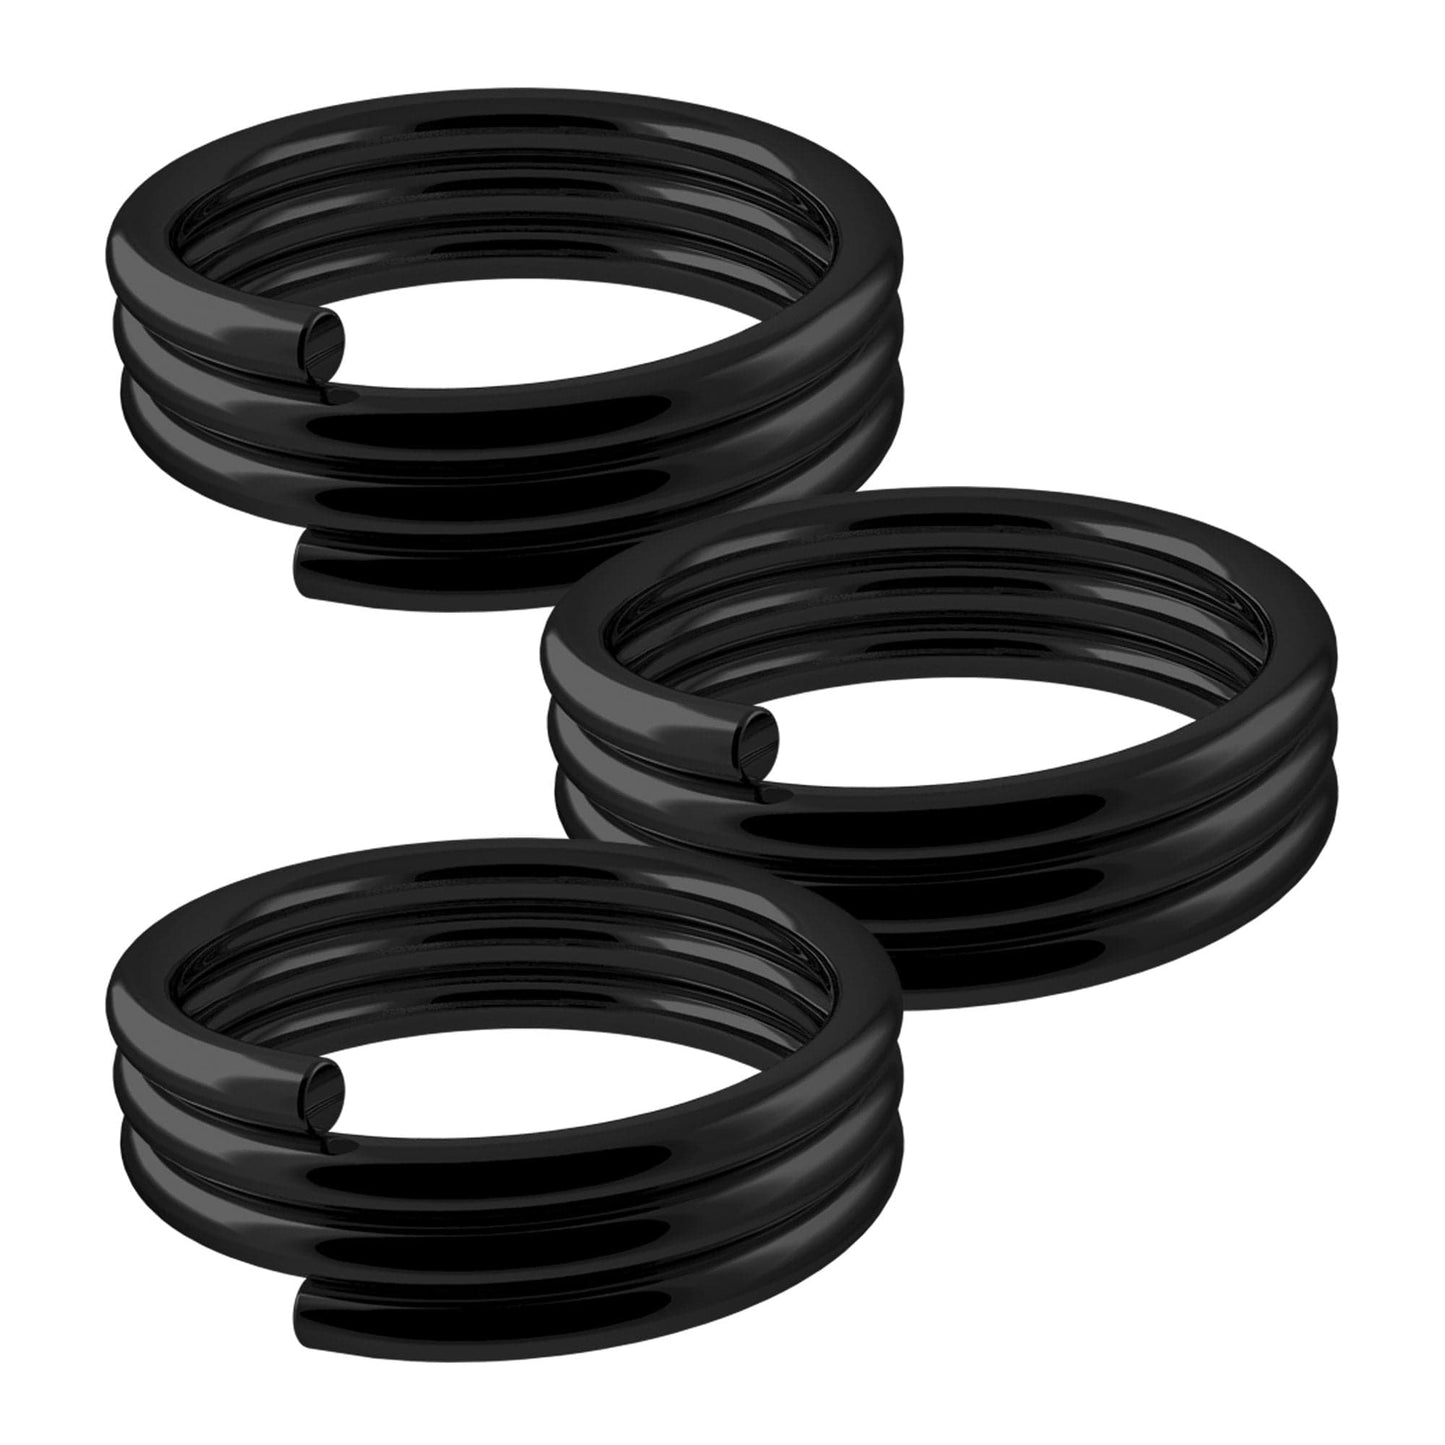 Designa Springs - for use with Nylon Shafts - 20 Sets (60) Black